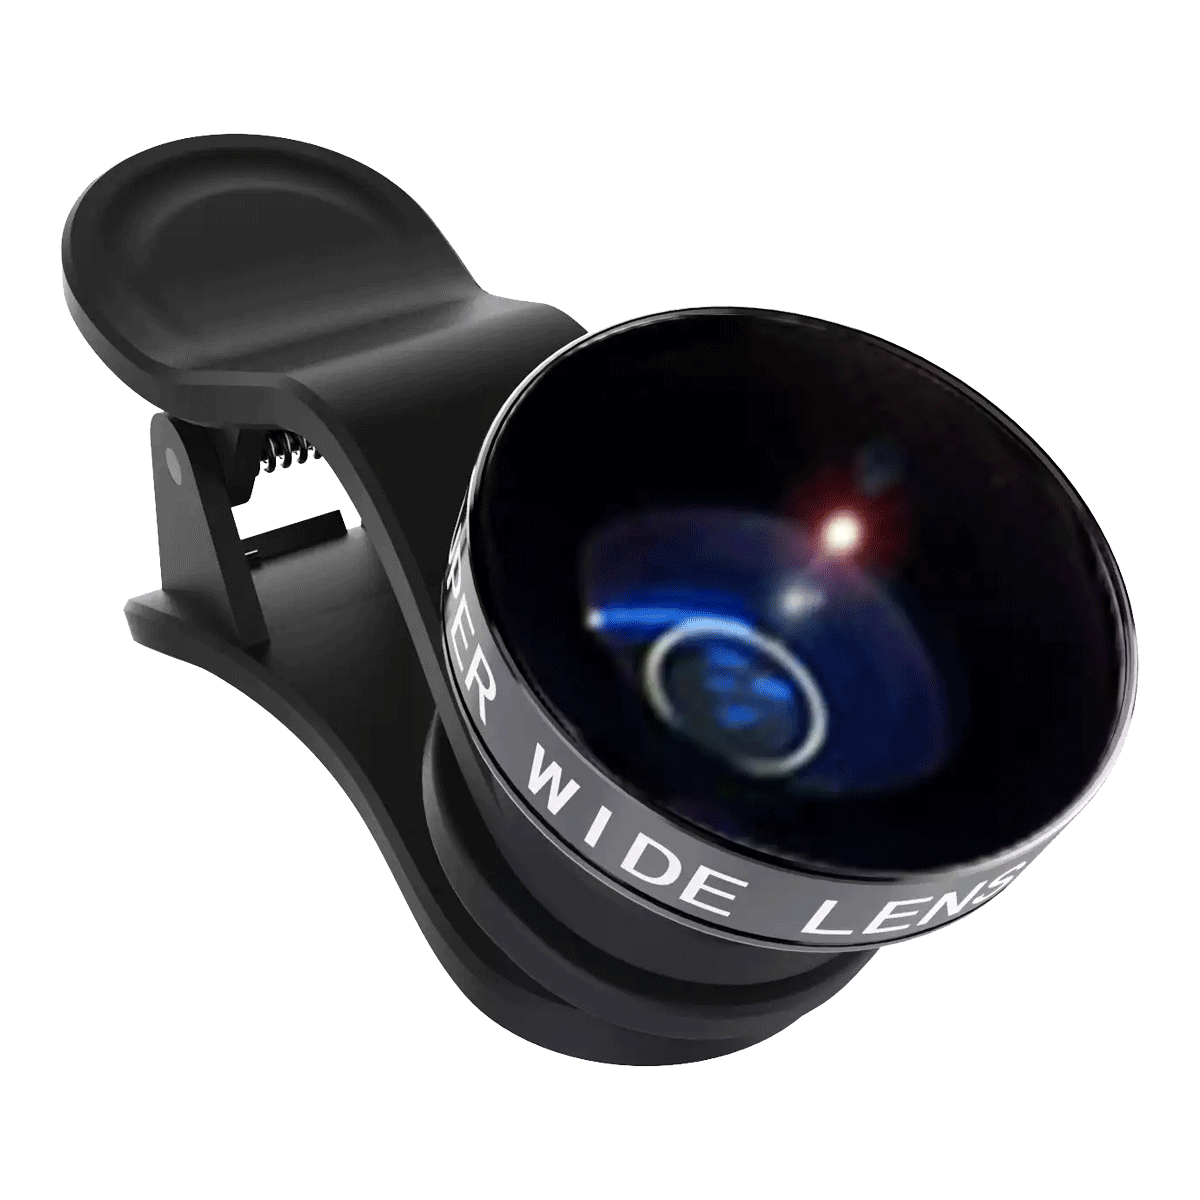 Lentes Kenko Real Pro Clip Lens Super Wide 0.4x (165°), para celulares